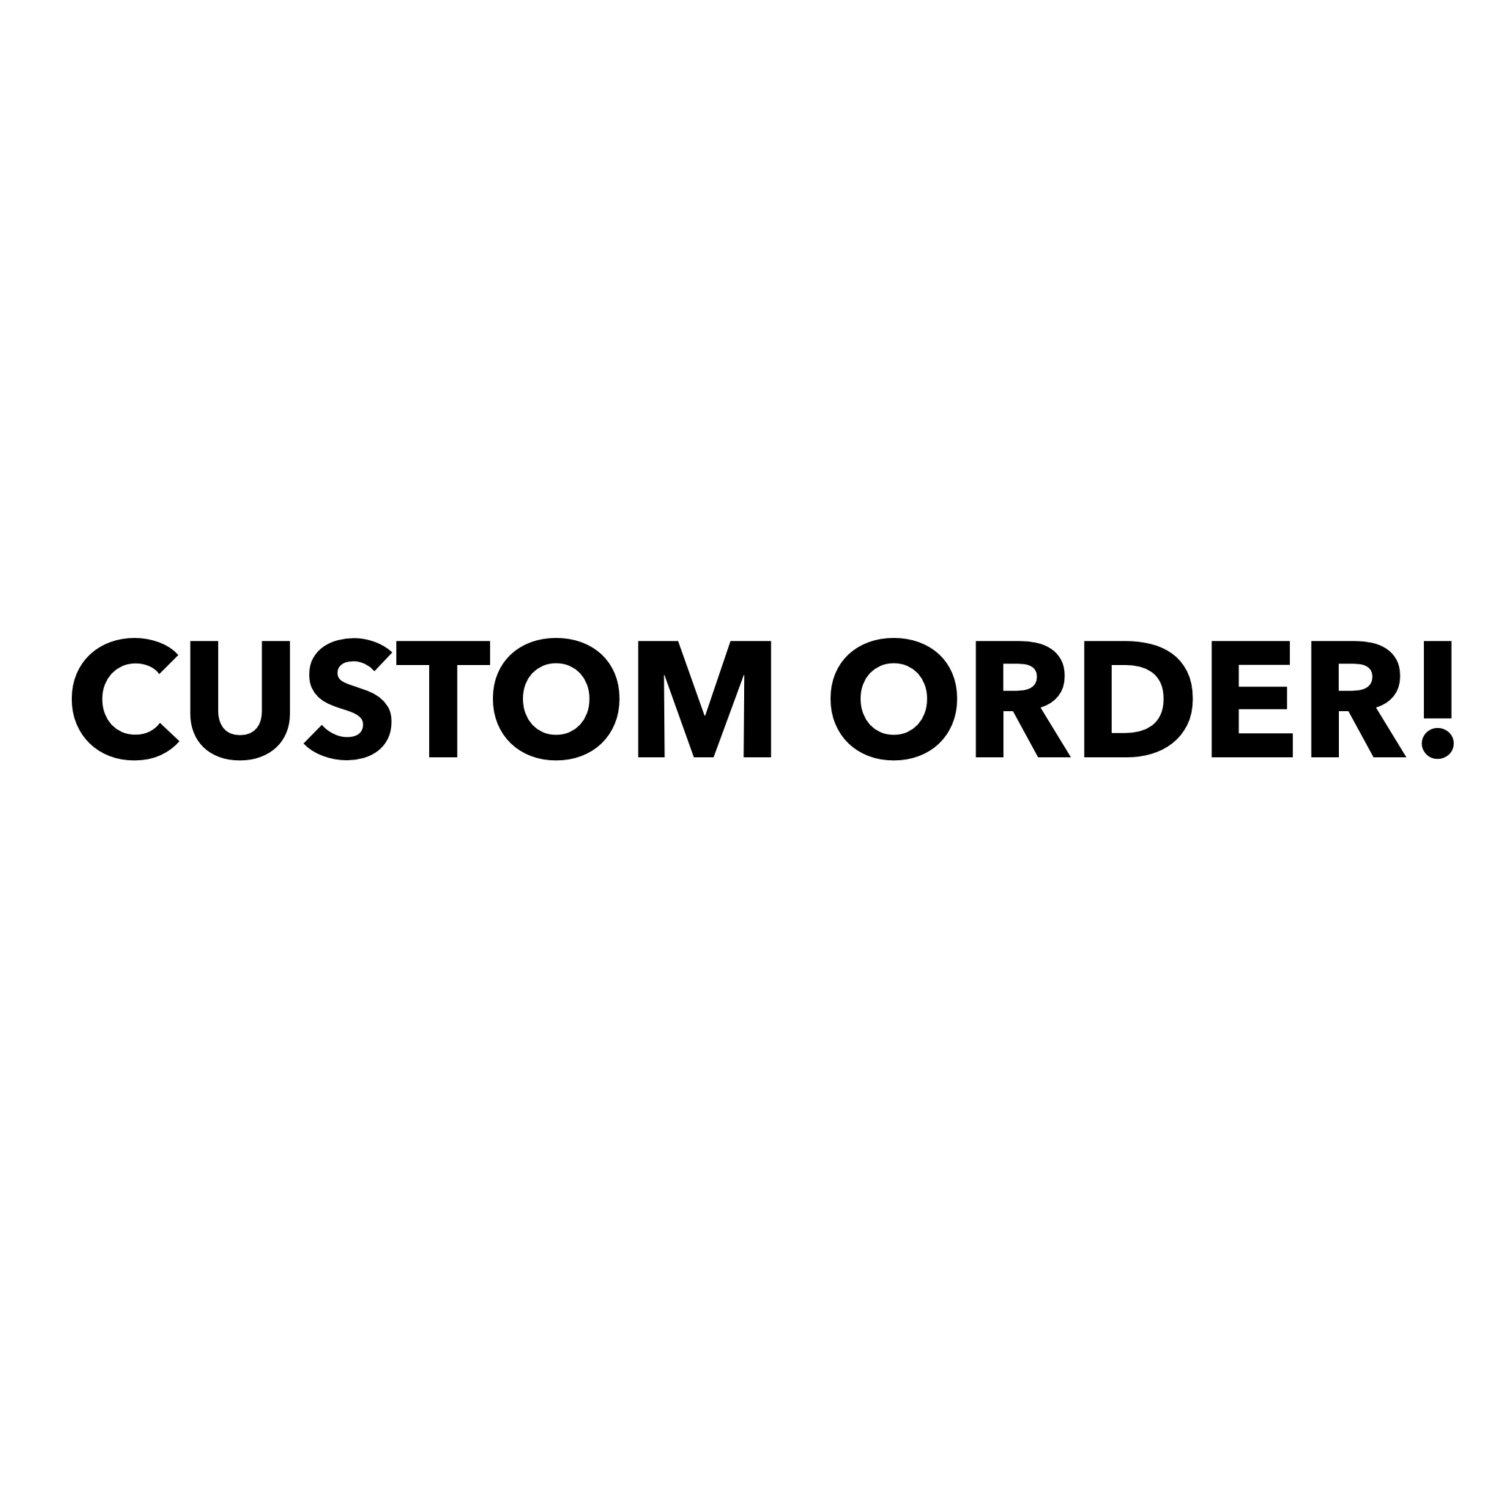 a custom order-2015-05-22